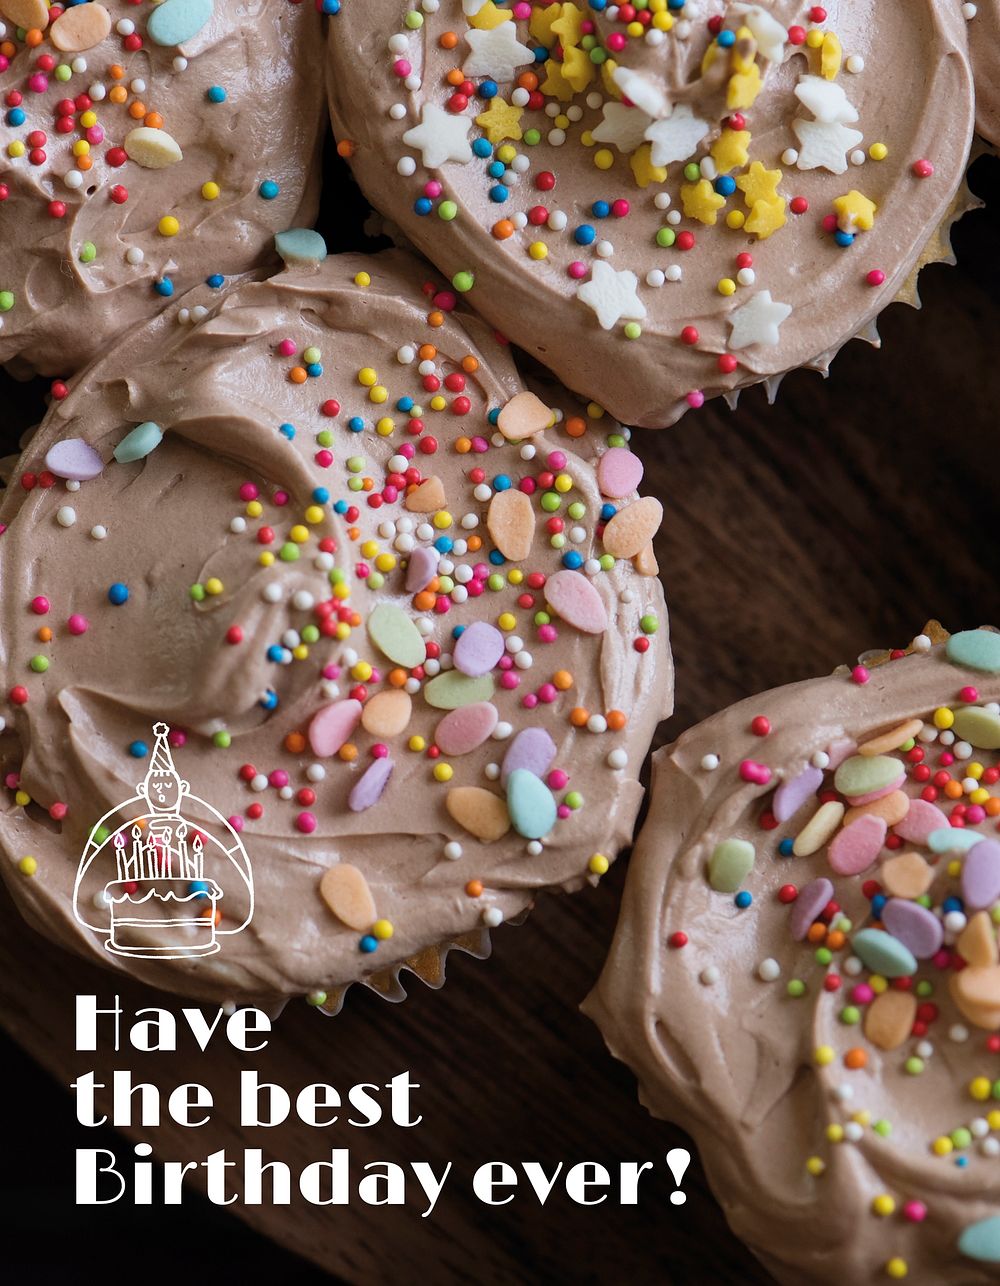 Birthday cupcakes flyer template, food photo vector